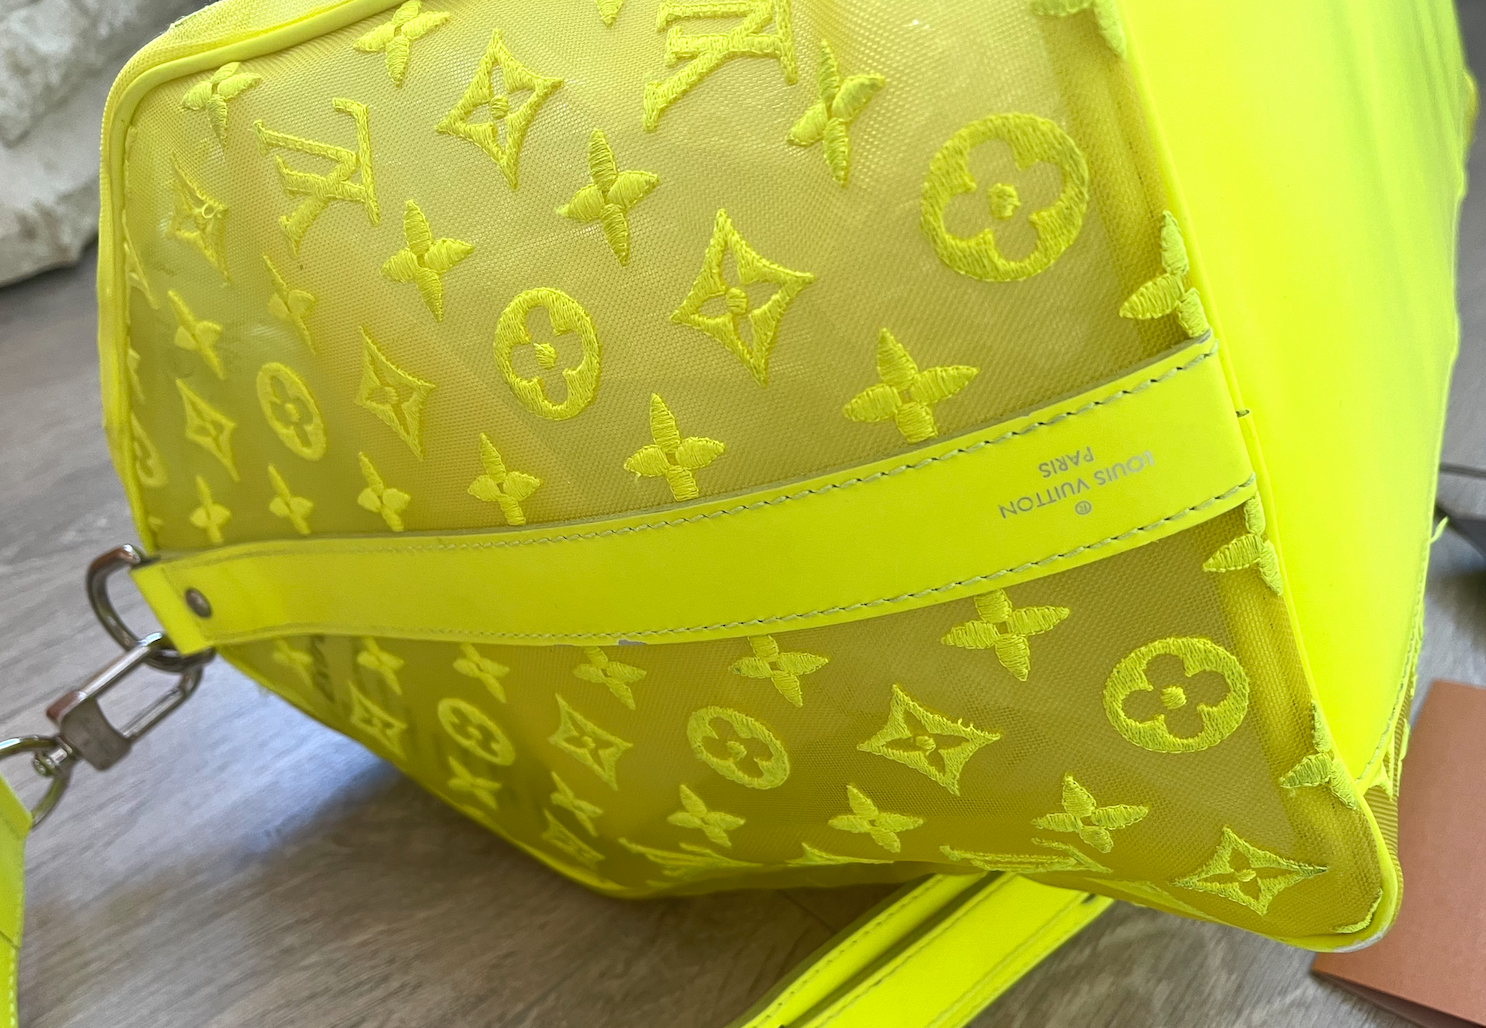 louis vuitton neon yellow bag